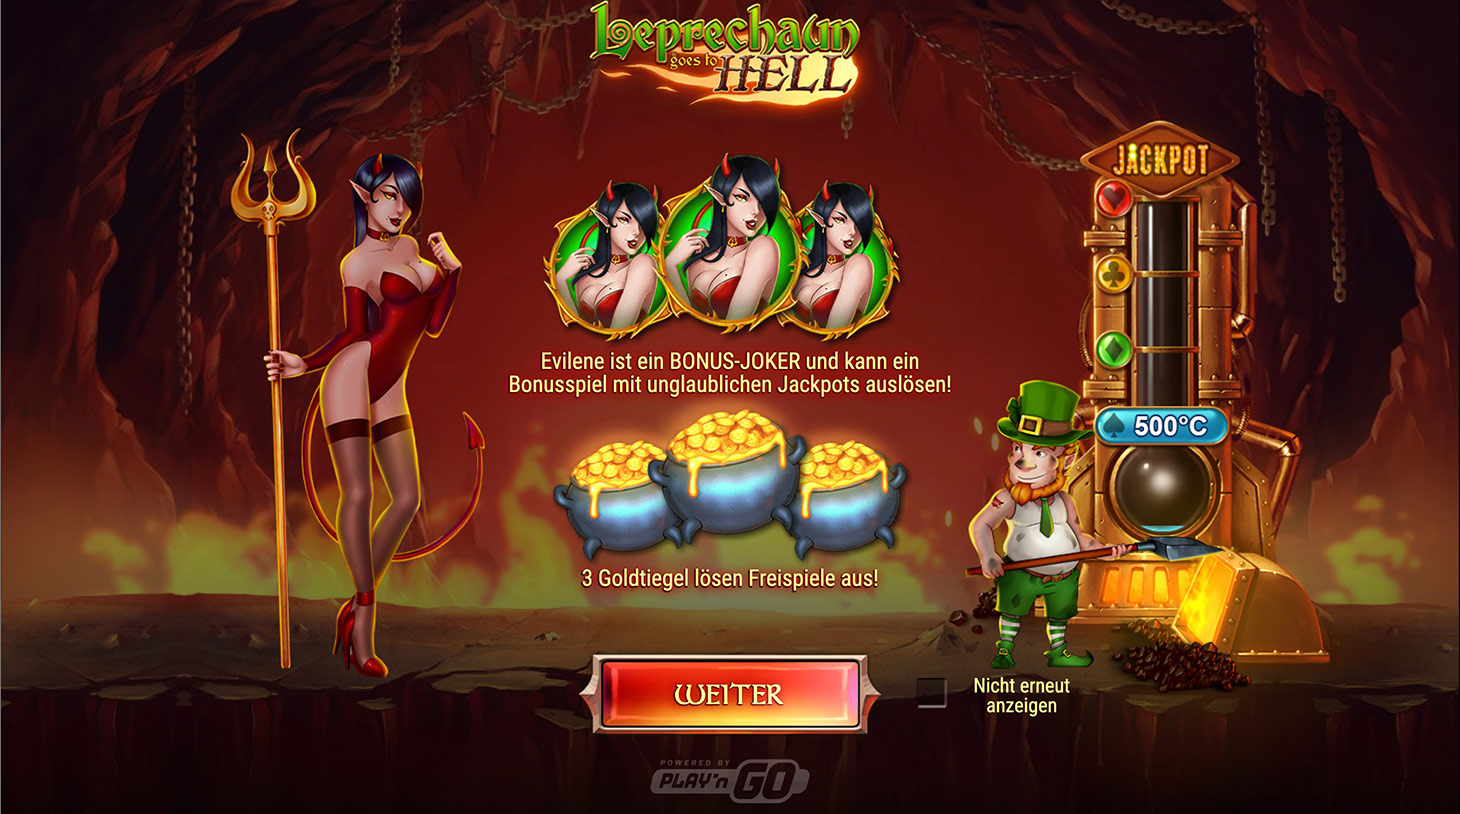 Leprechaun goes to hell Spielautomaten